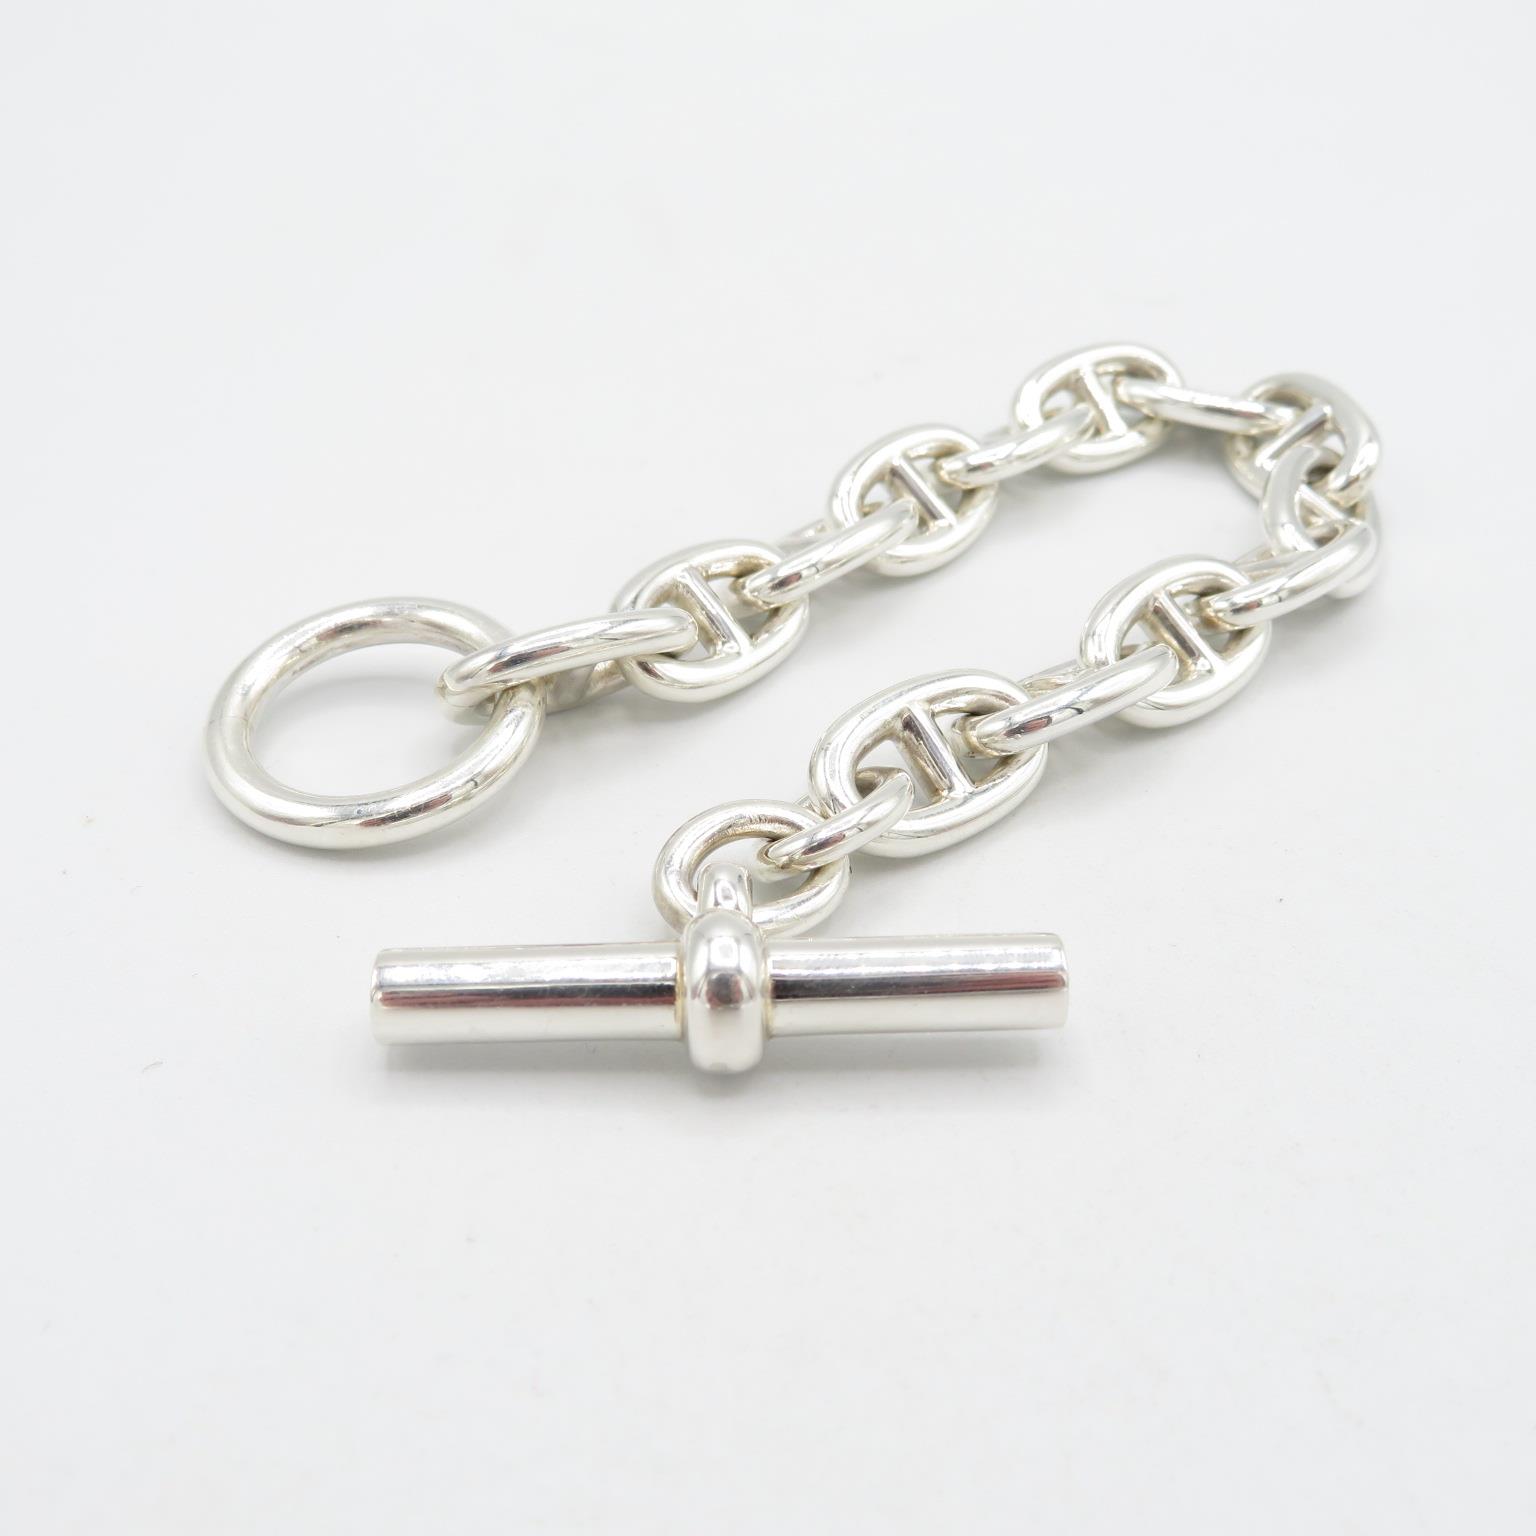 HM 925 Sterling Silver link bracelet (70g) measures 22cm when open including loop and bar - Image 2 of 4